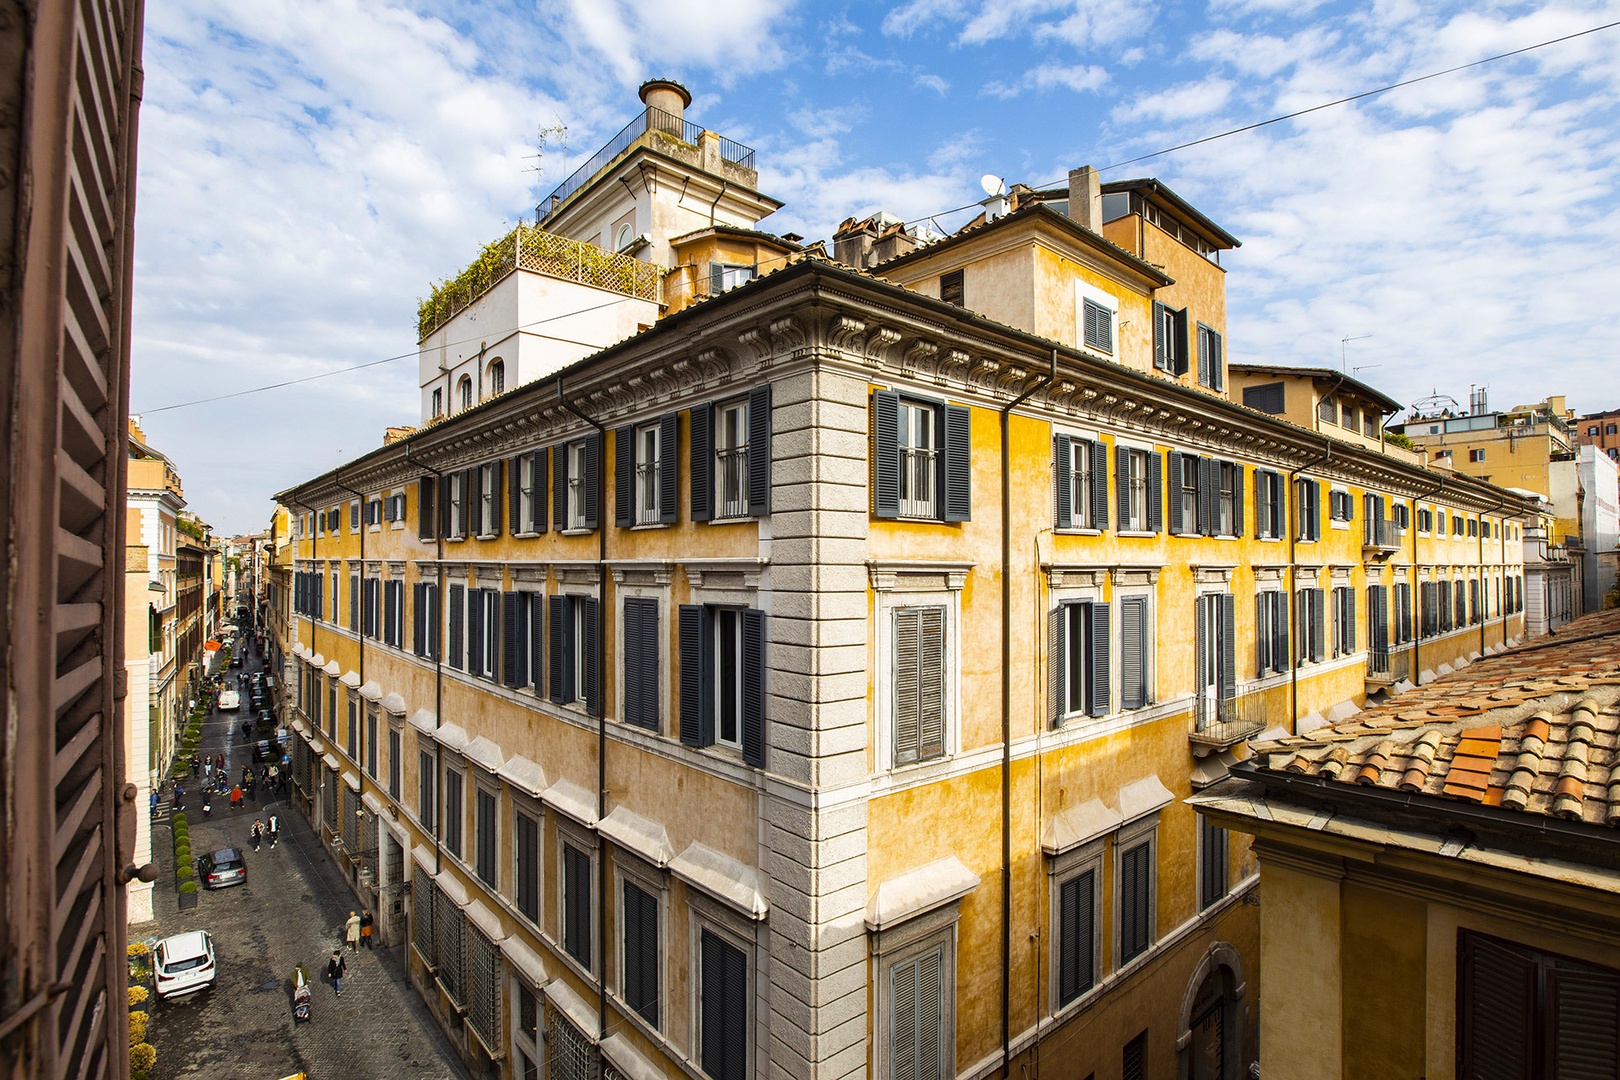 Across the street historical Palazzo Torlonia.